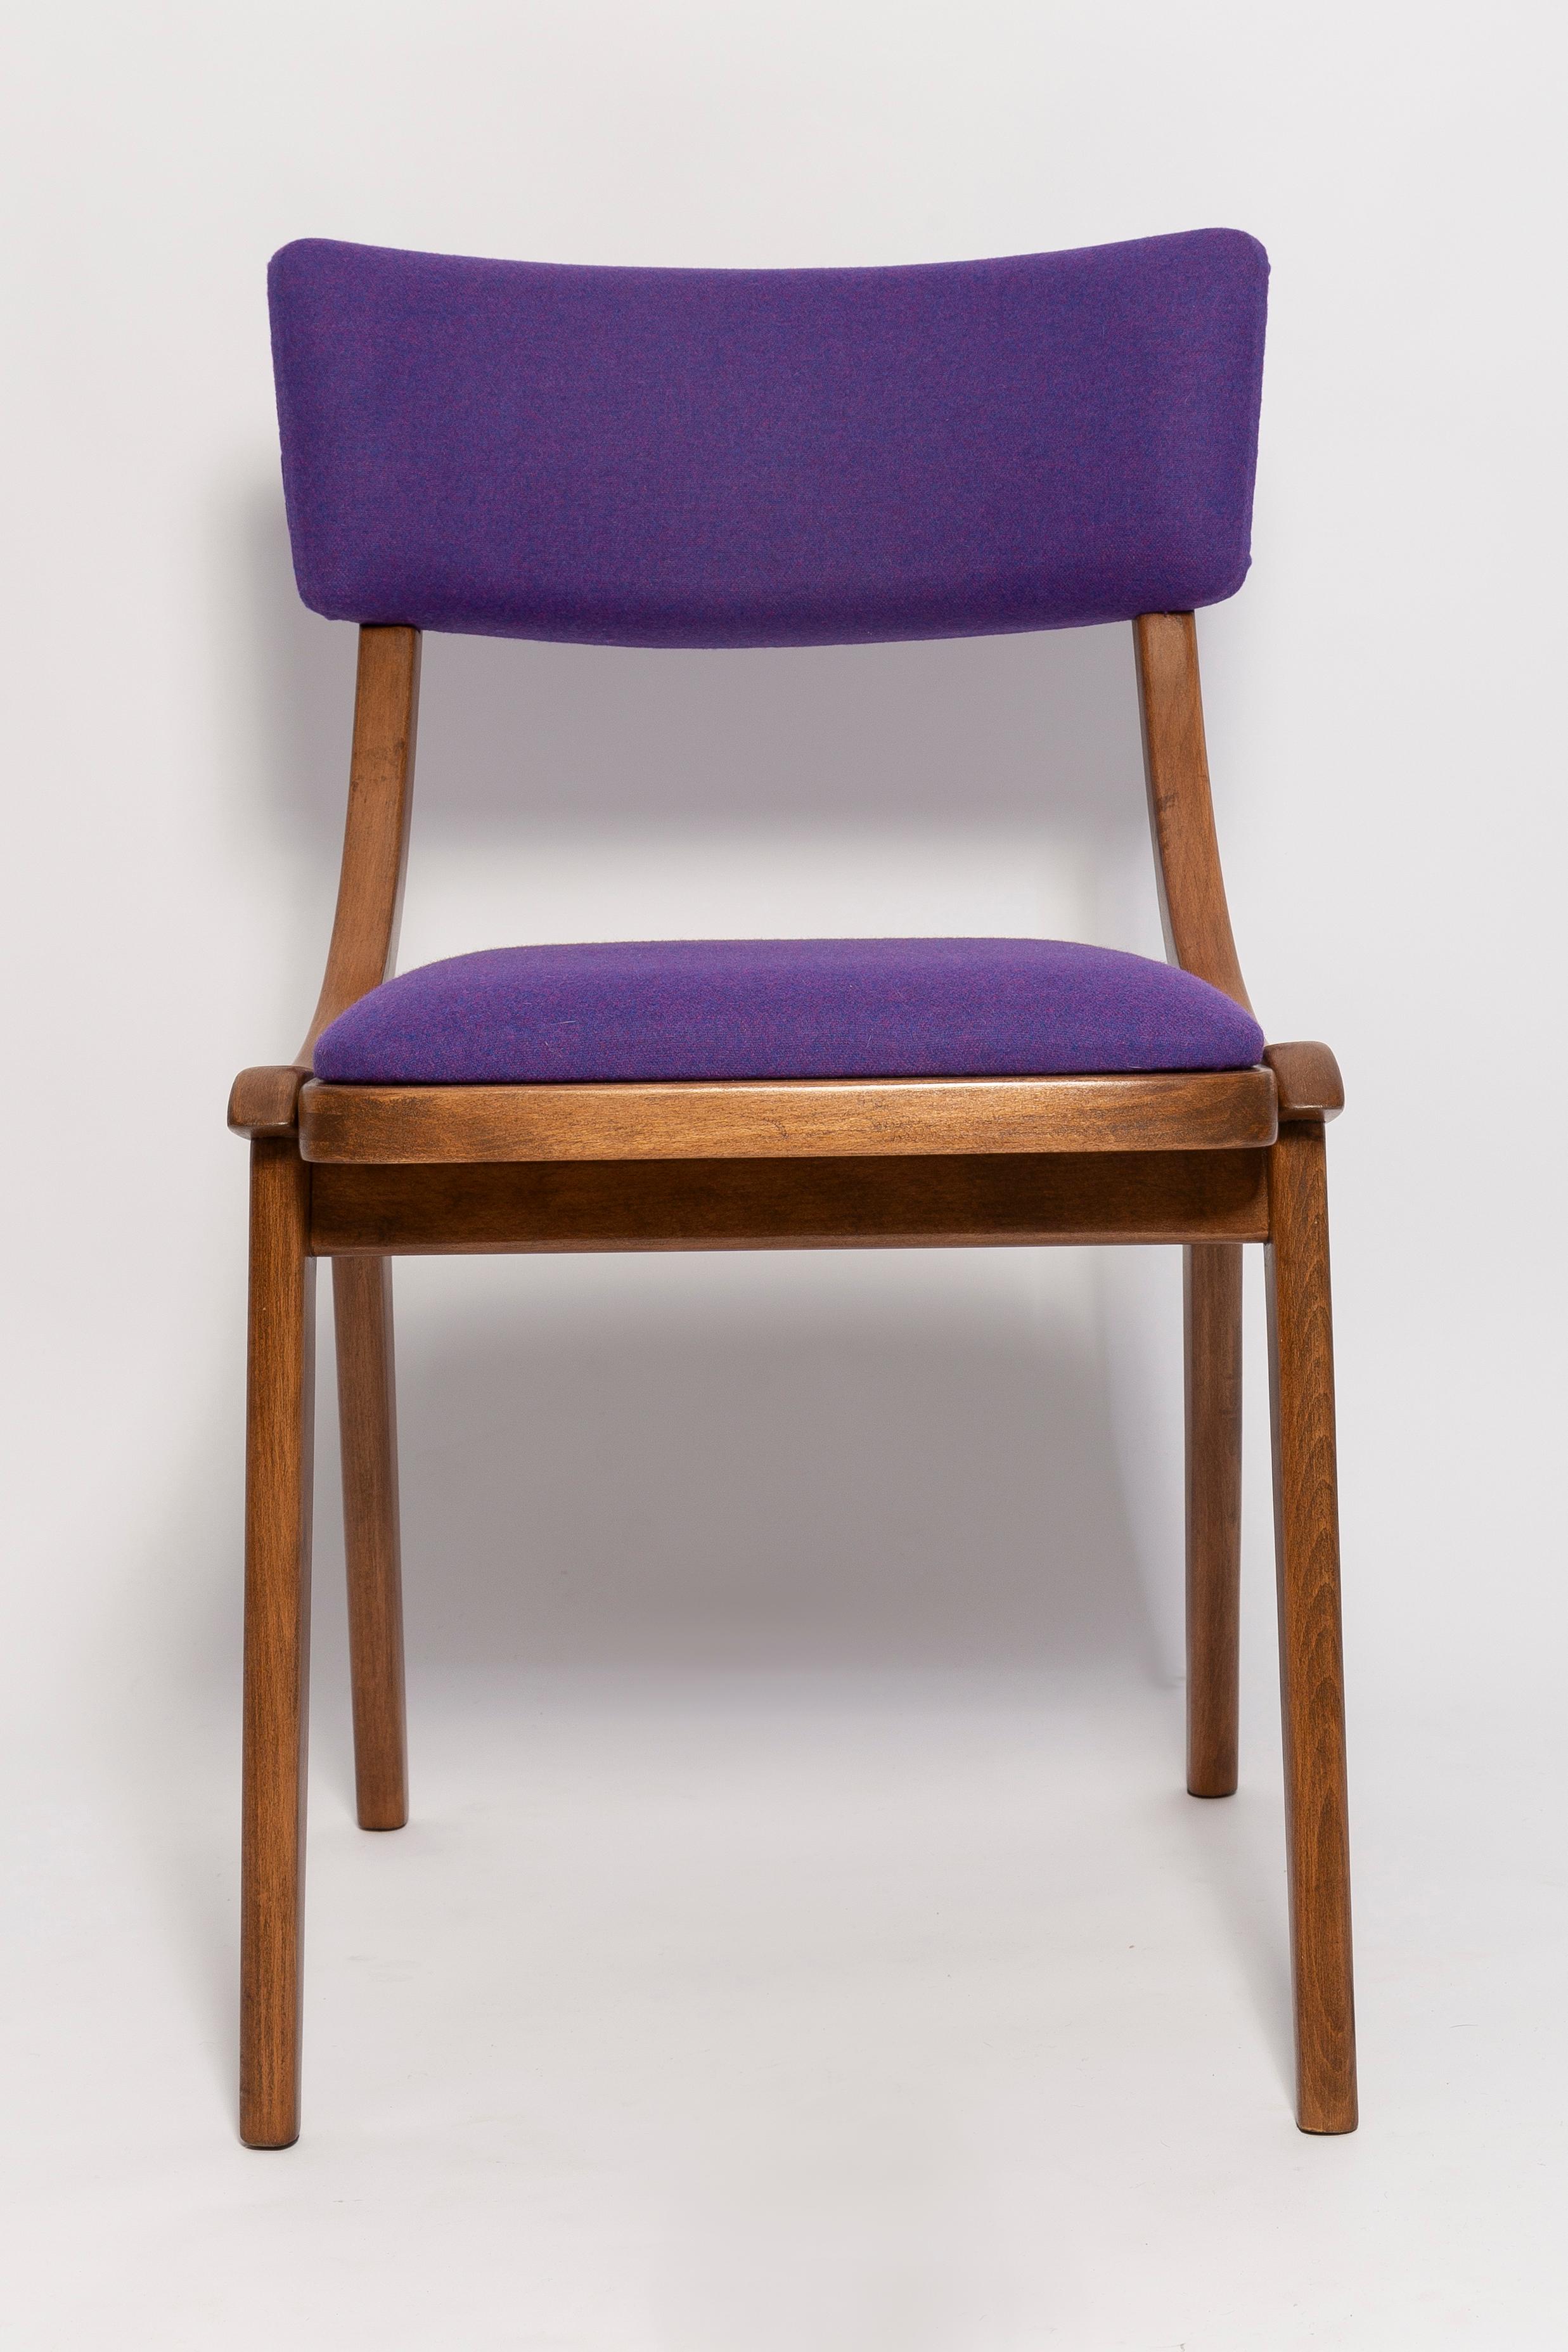 20th Century Mid Century Modern Bumerang Chair, Purple Violet Wool, Poland, 1960s For Sale